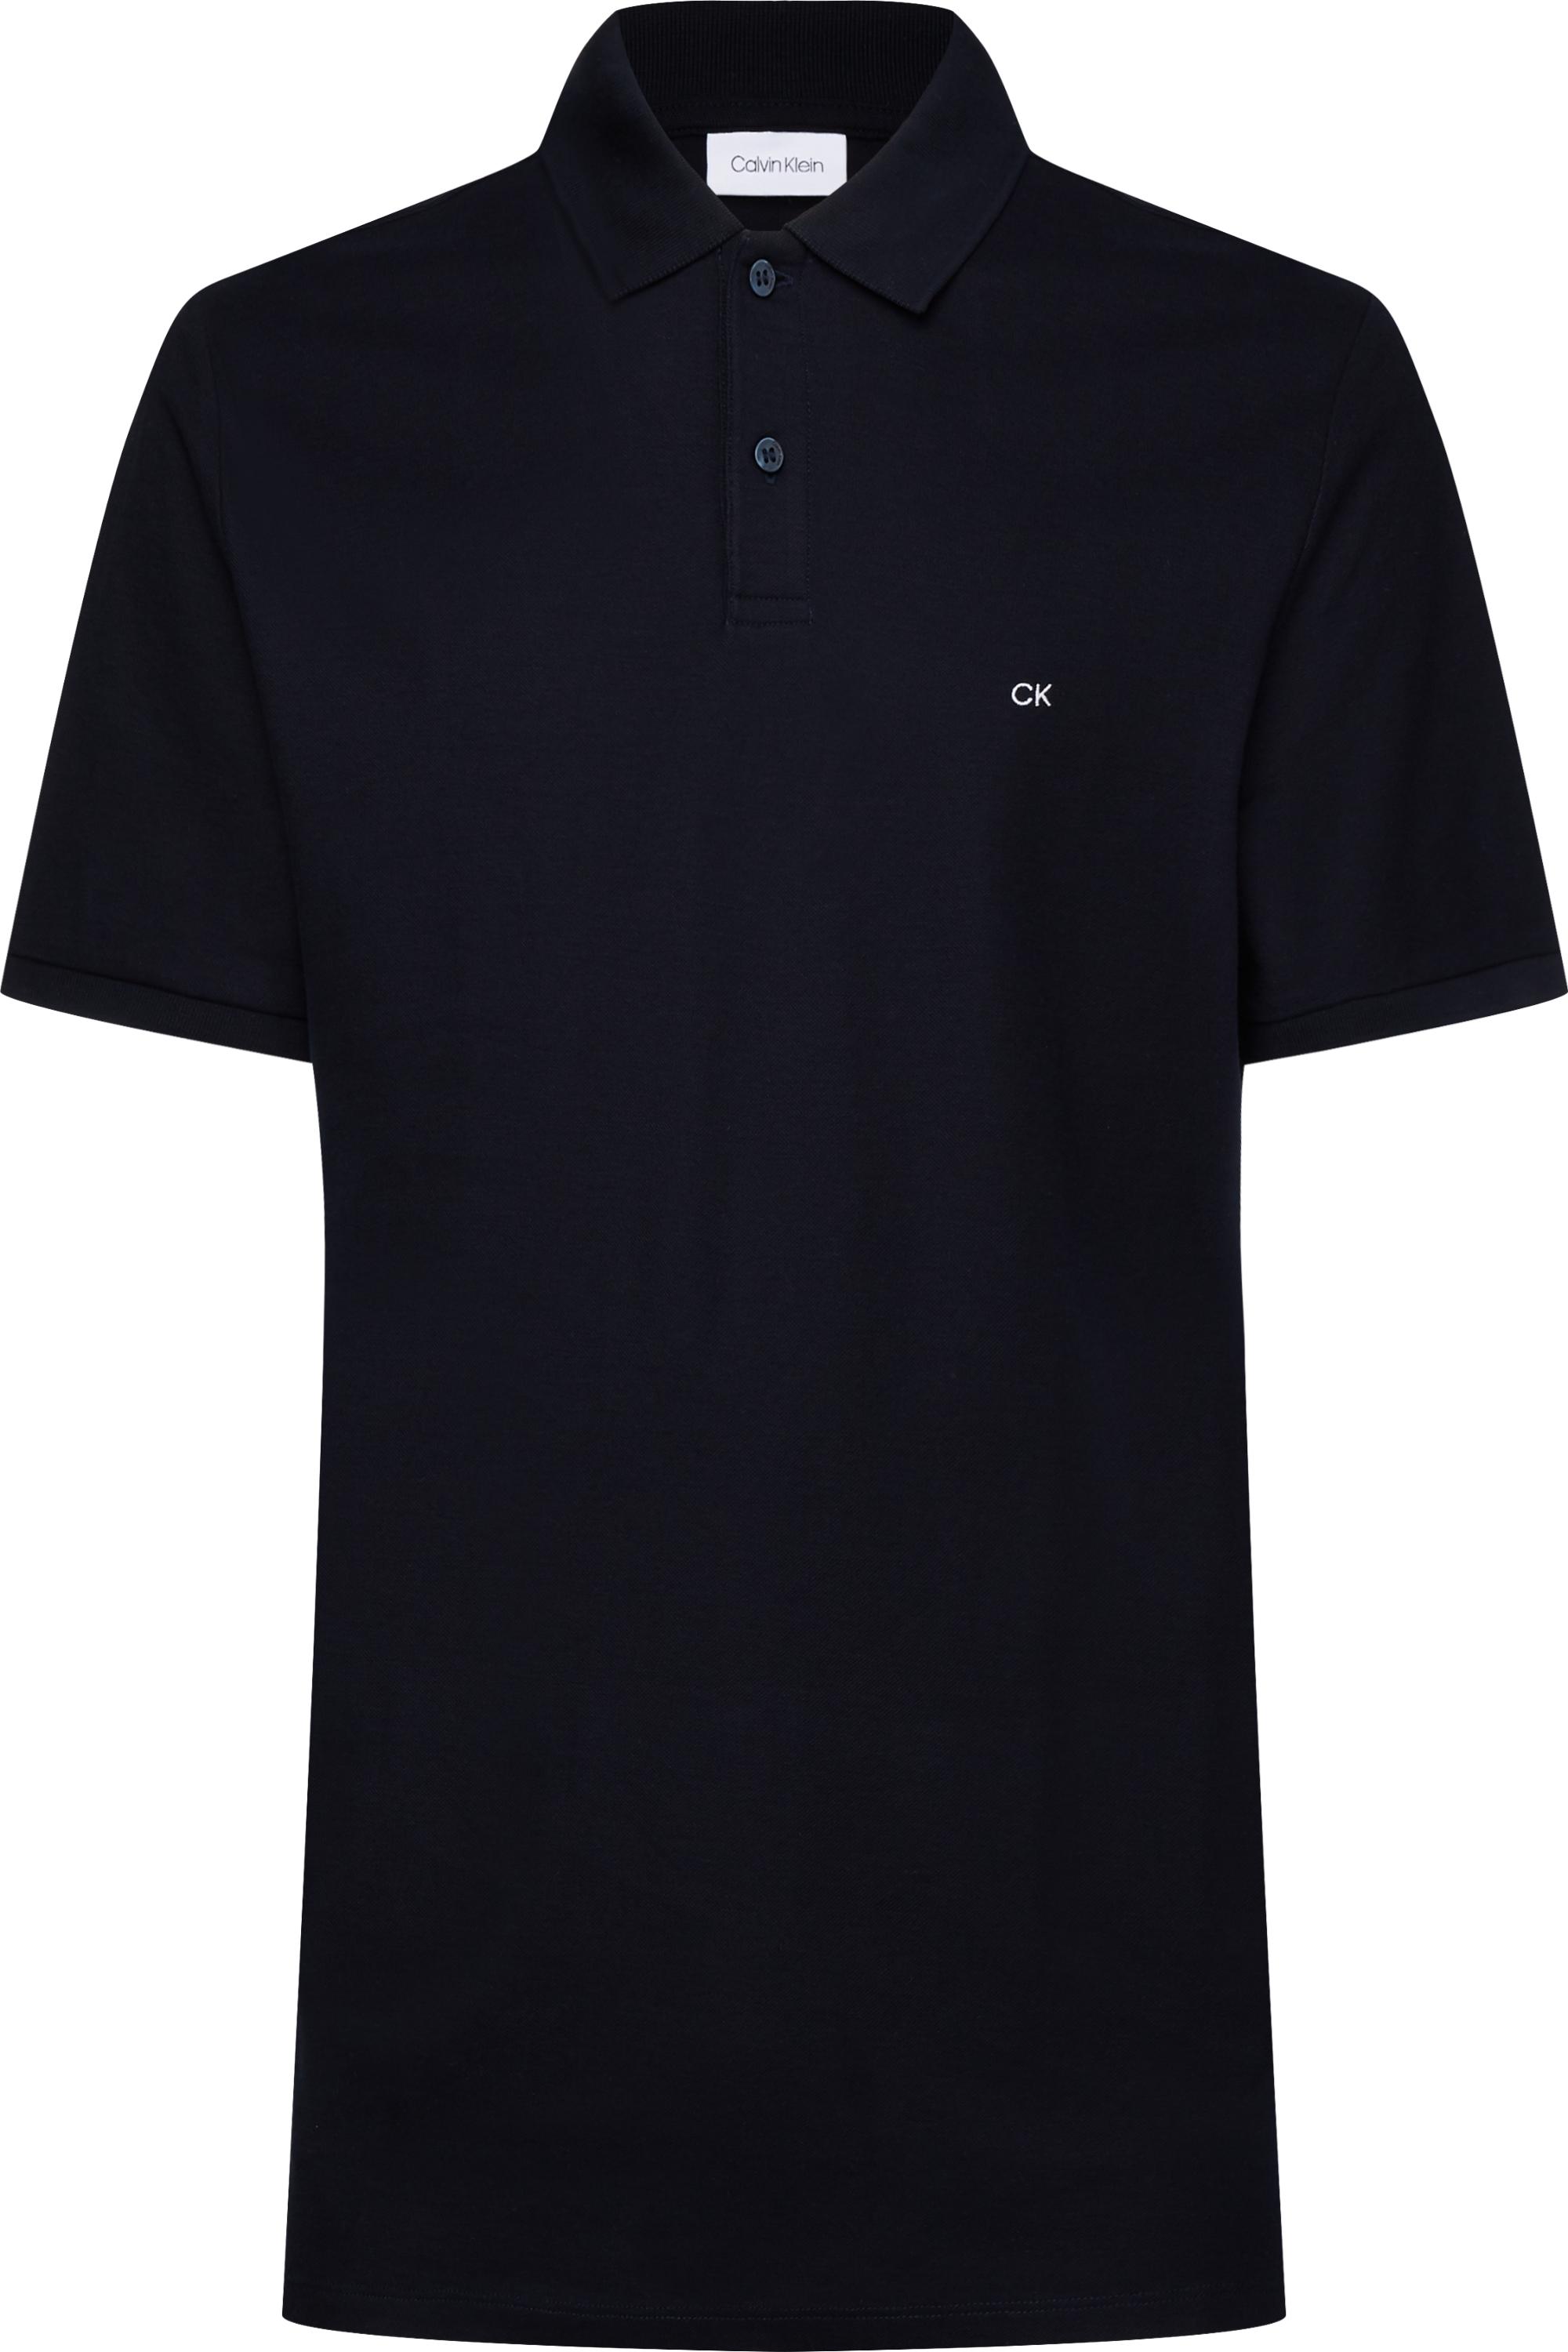 Calvin Klein Cotton Navy Pique Slim-fit Polo Shirt in Blue for Men - Lyst